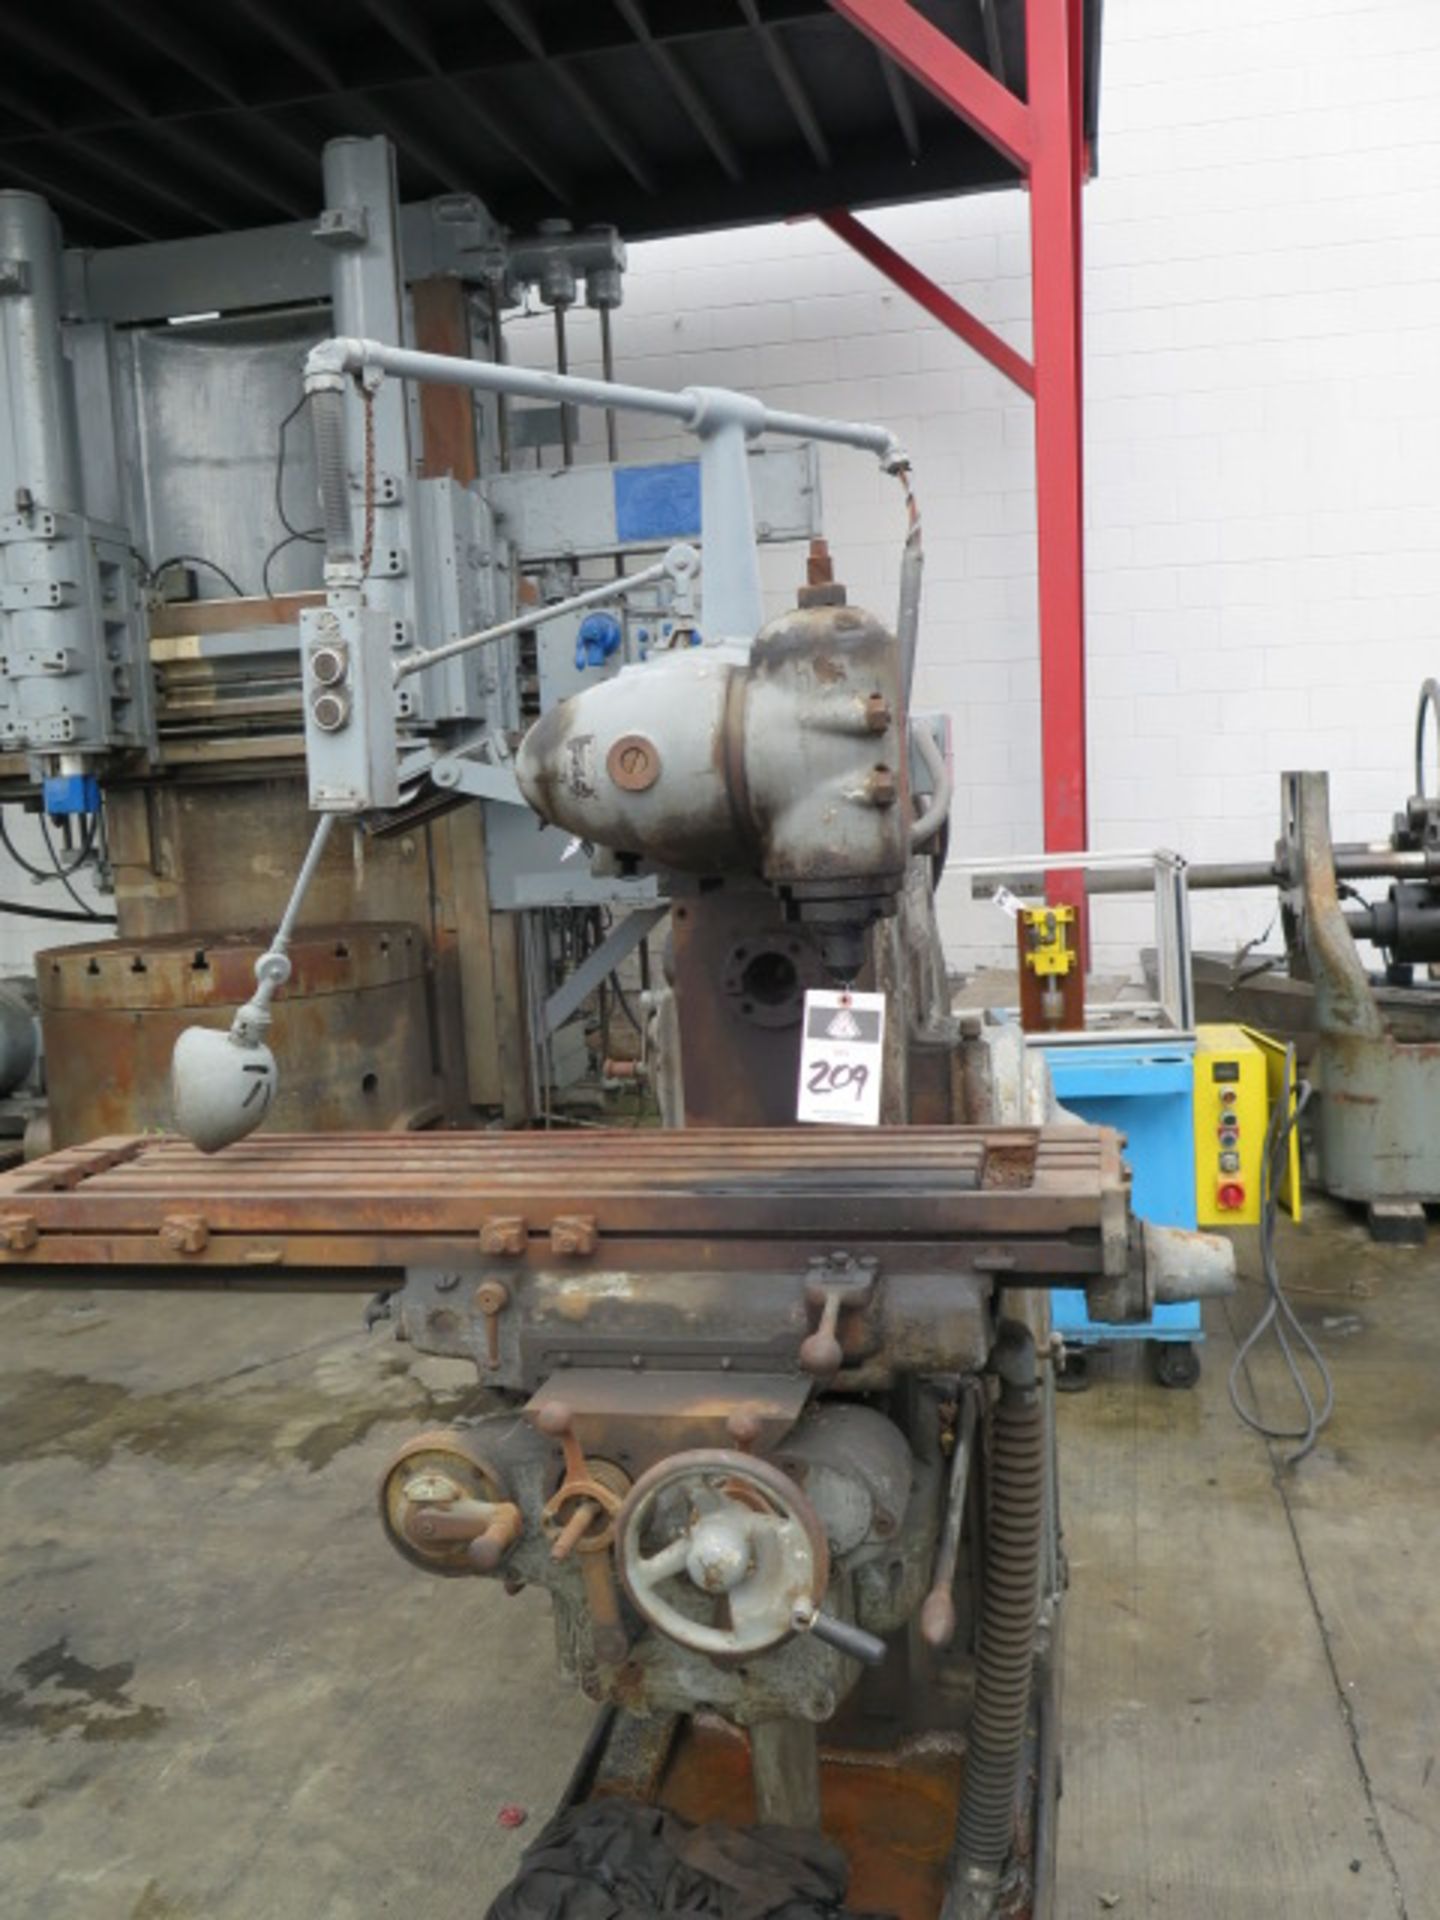 Kearney & Trecker Milwaukee mdl. 5HP-2CH Universal Mill 2/ 25-1500 Horizontal RPM, 40-1200